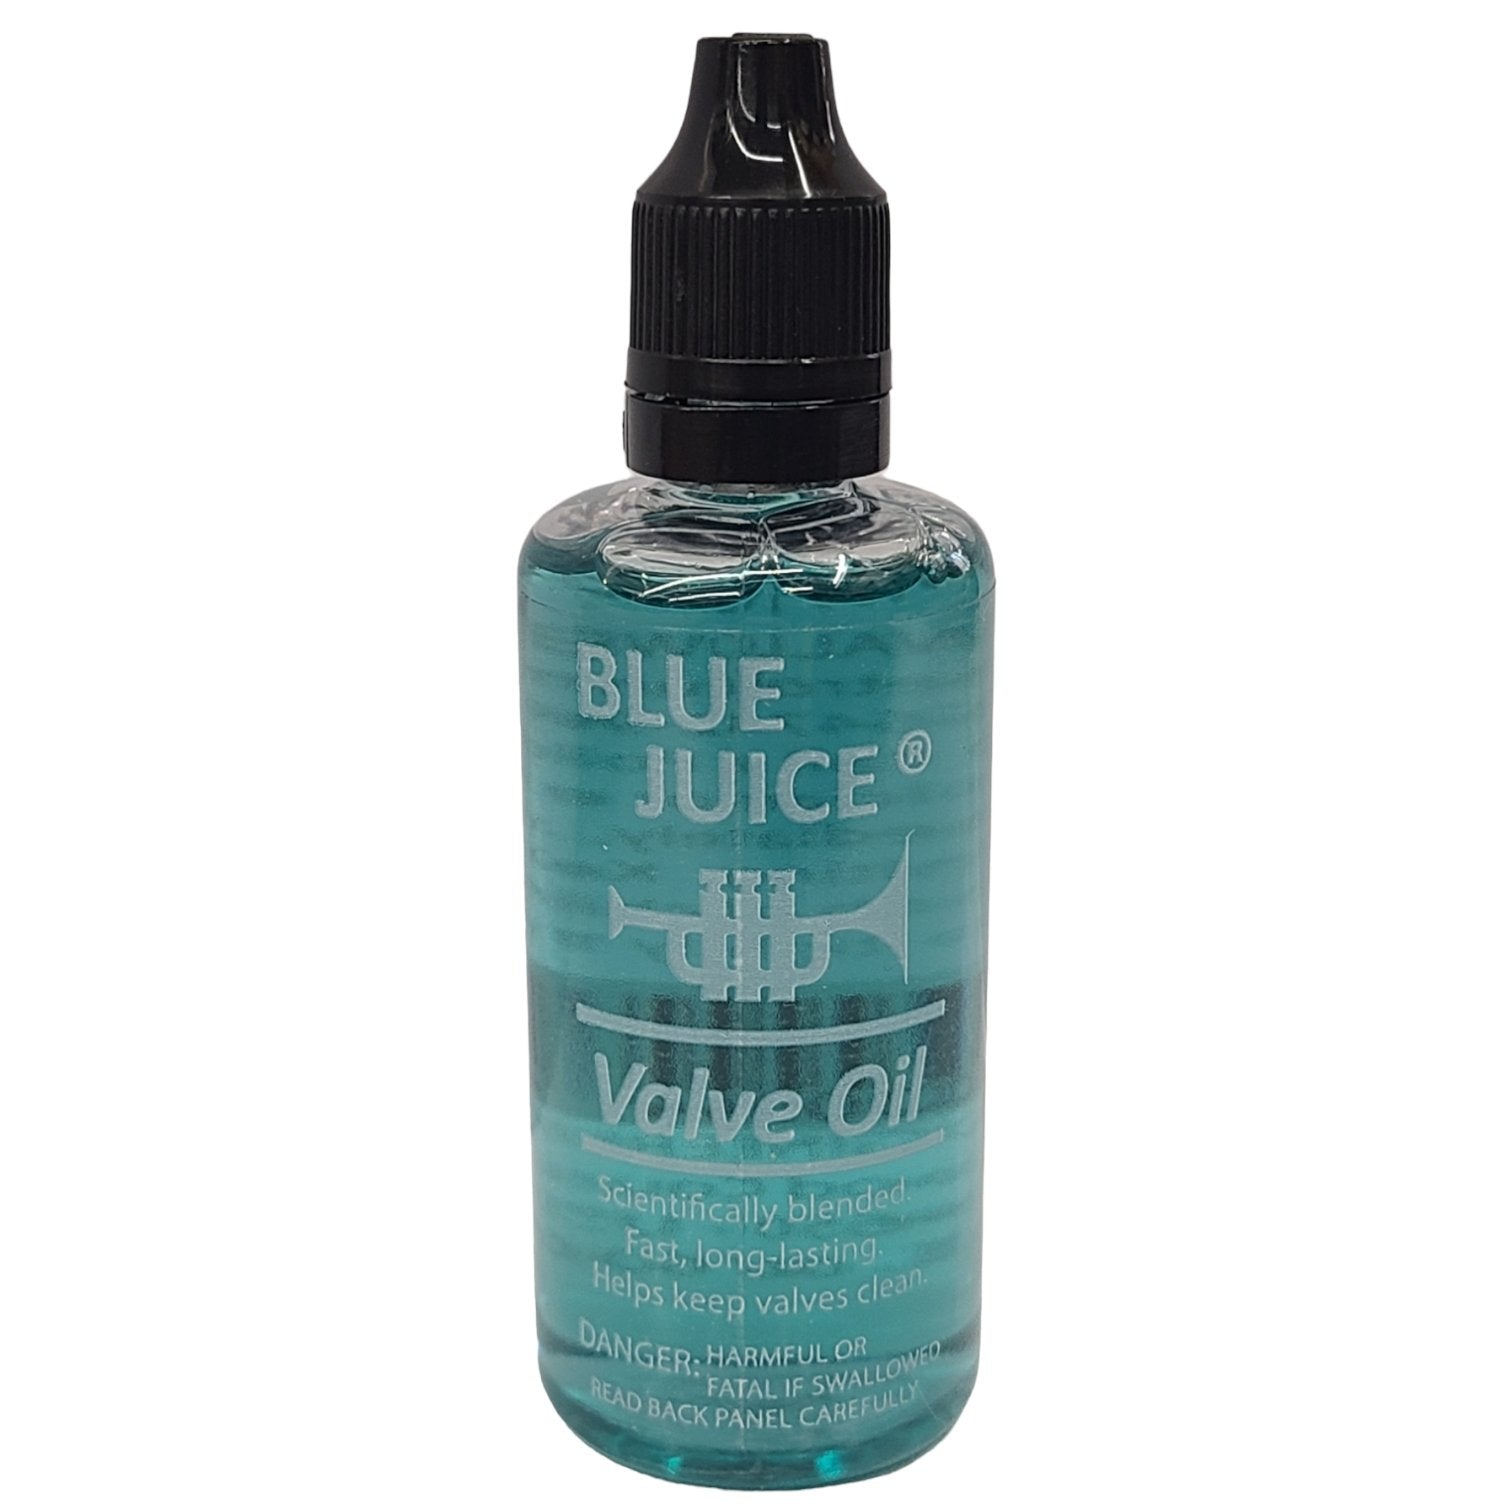 Blue Juice 2 Fluid Oz. Trumpet Valve Oil 2-Pack